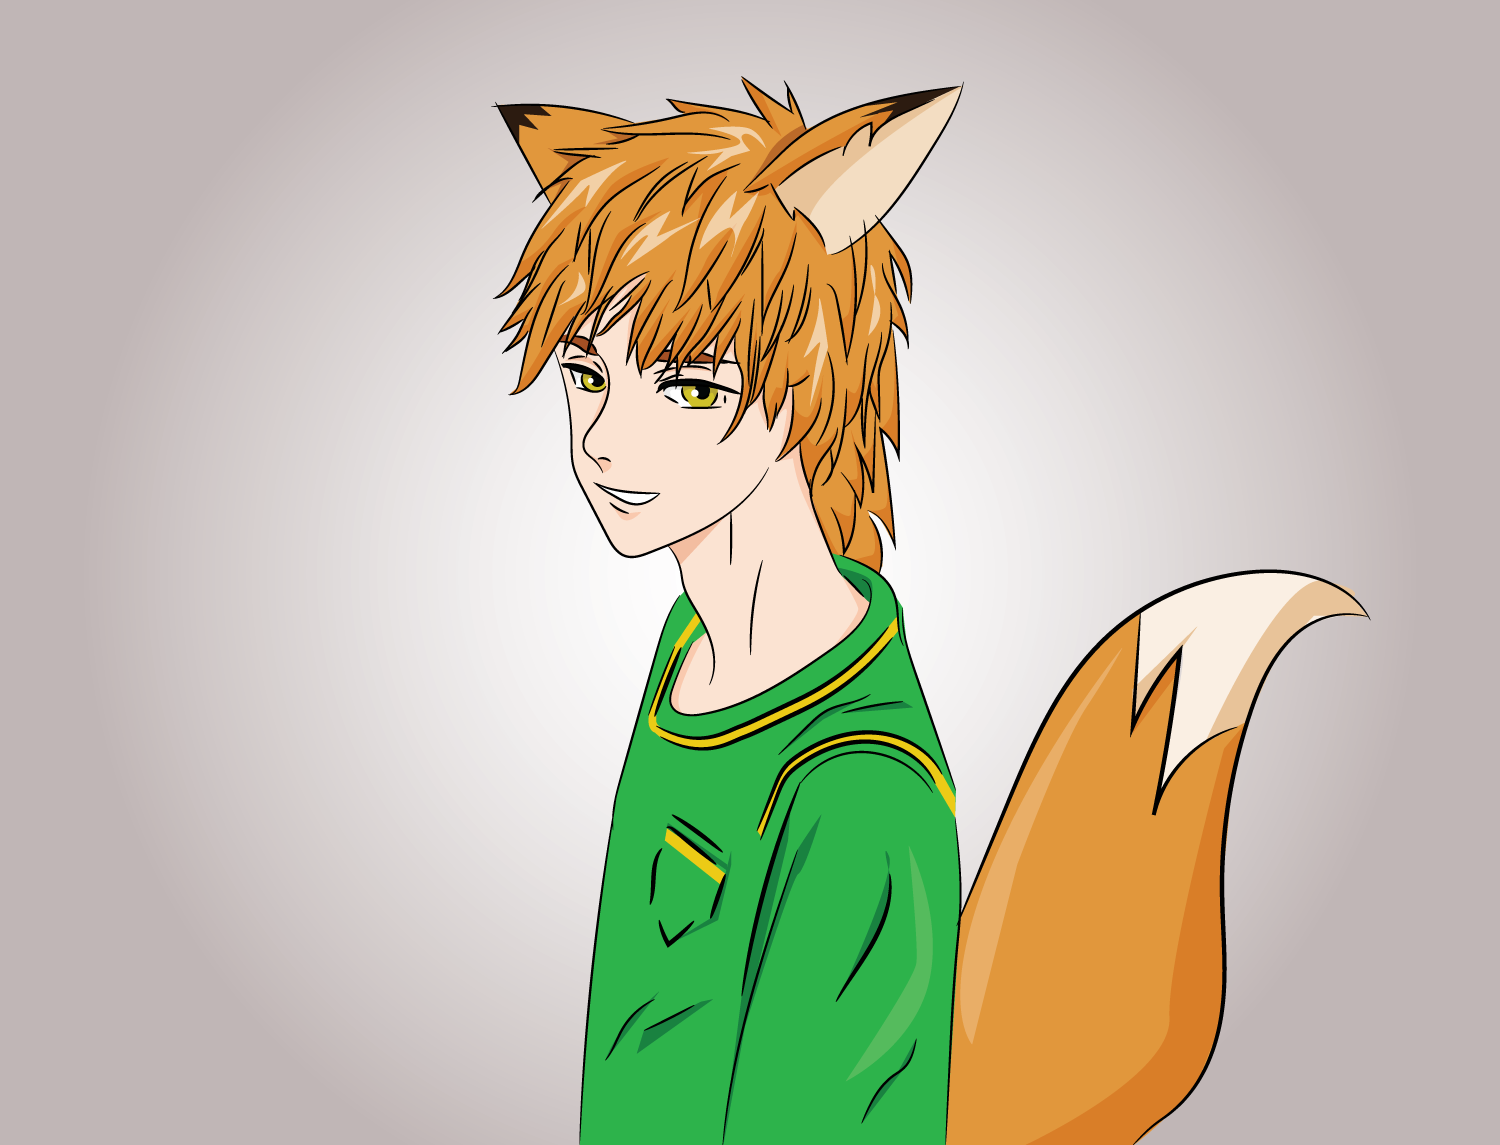 fox.png